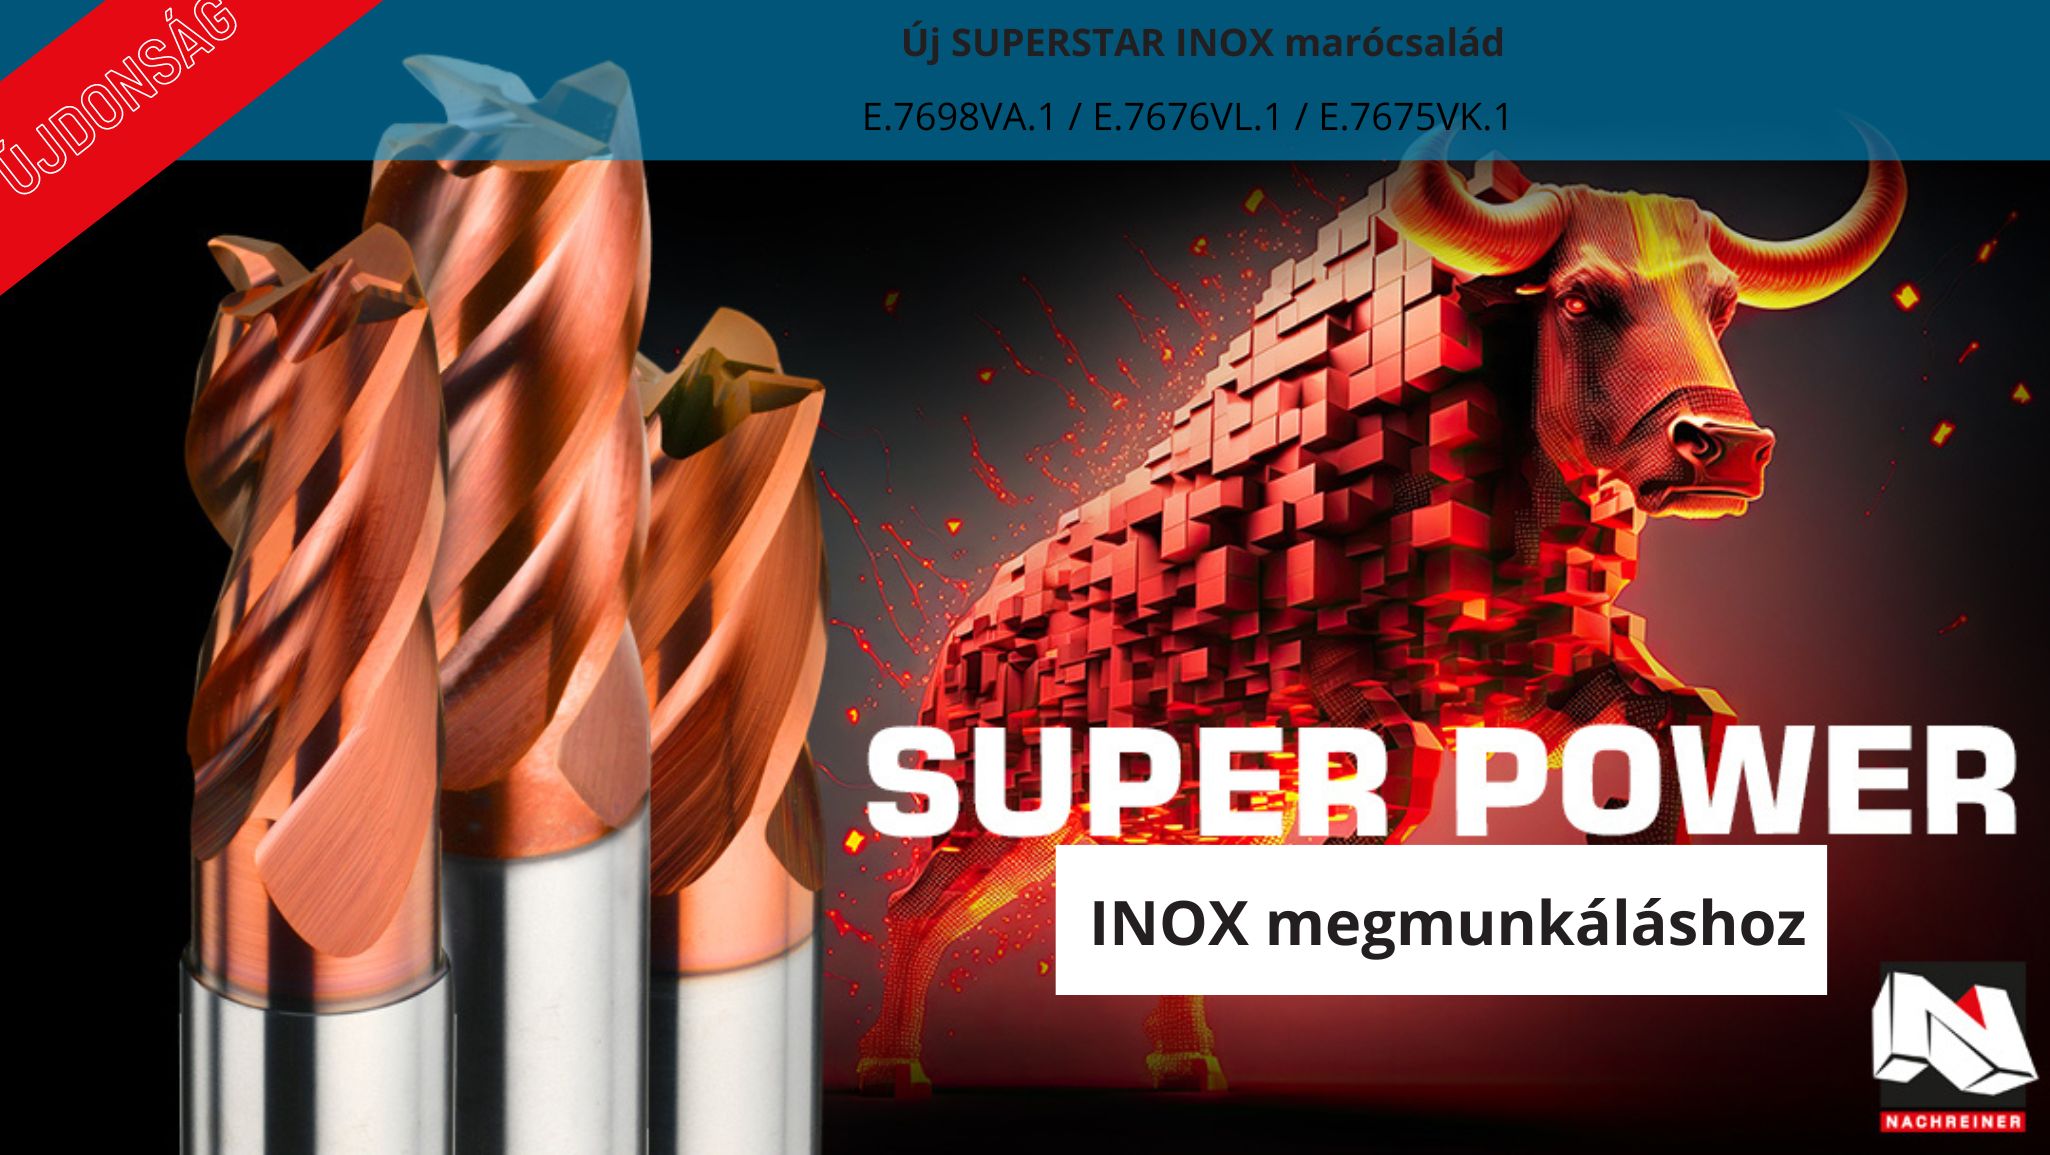 SUPERSTAR INOX